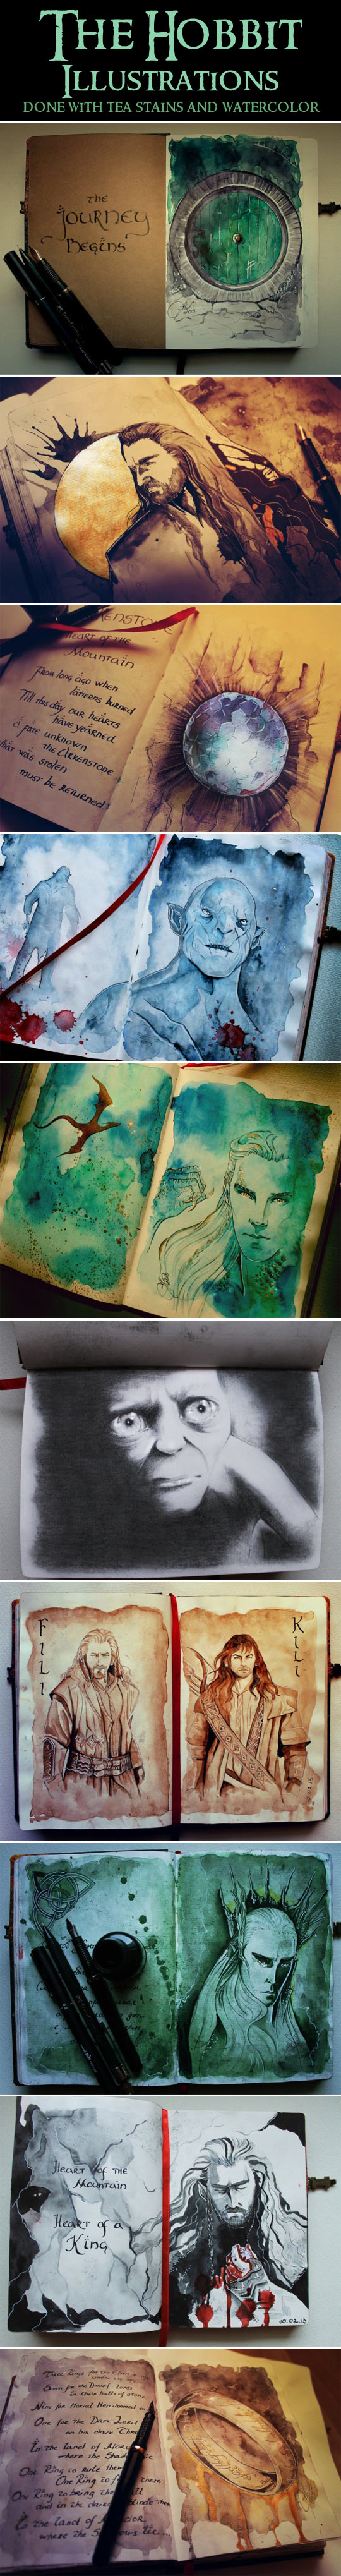 The Hobbit Illustrations.